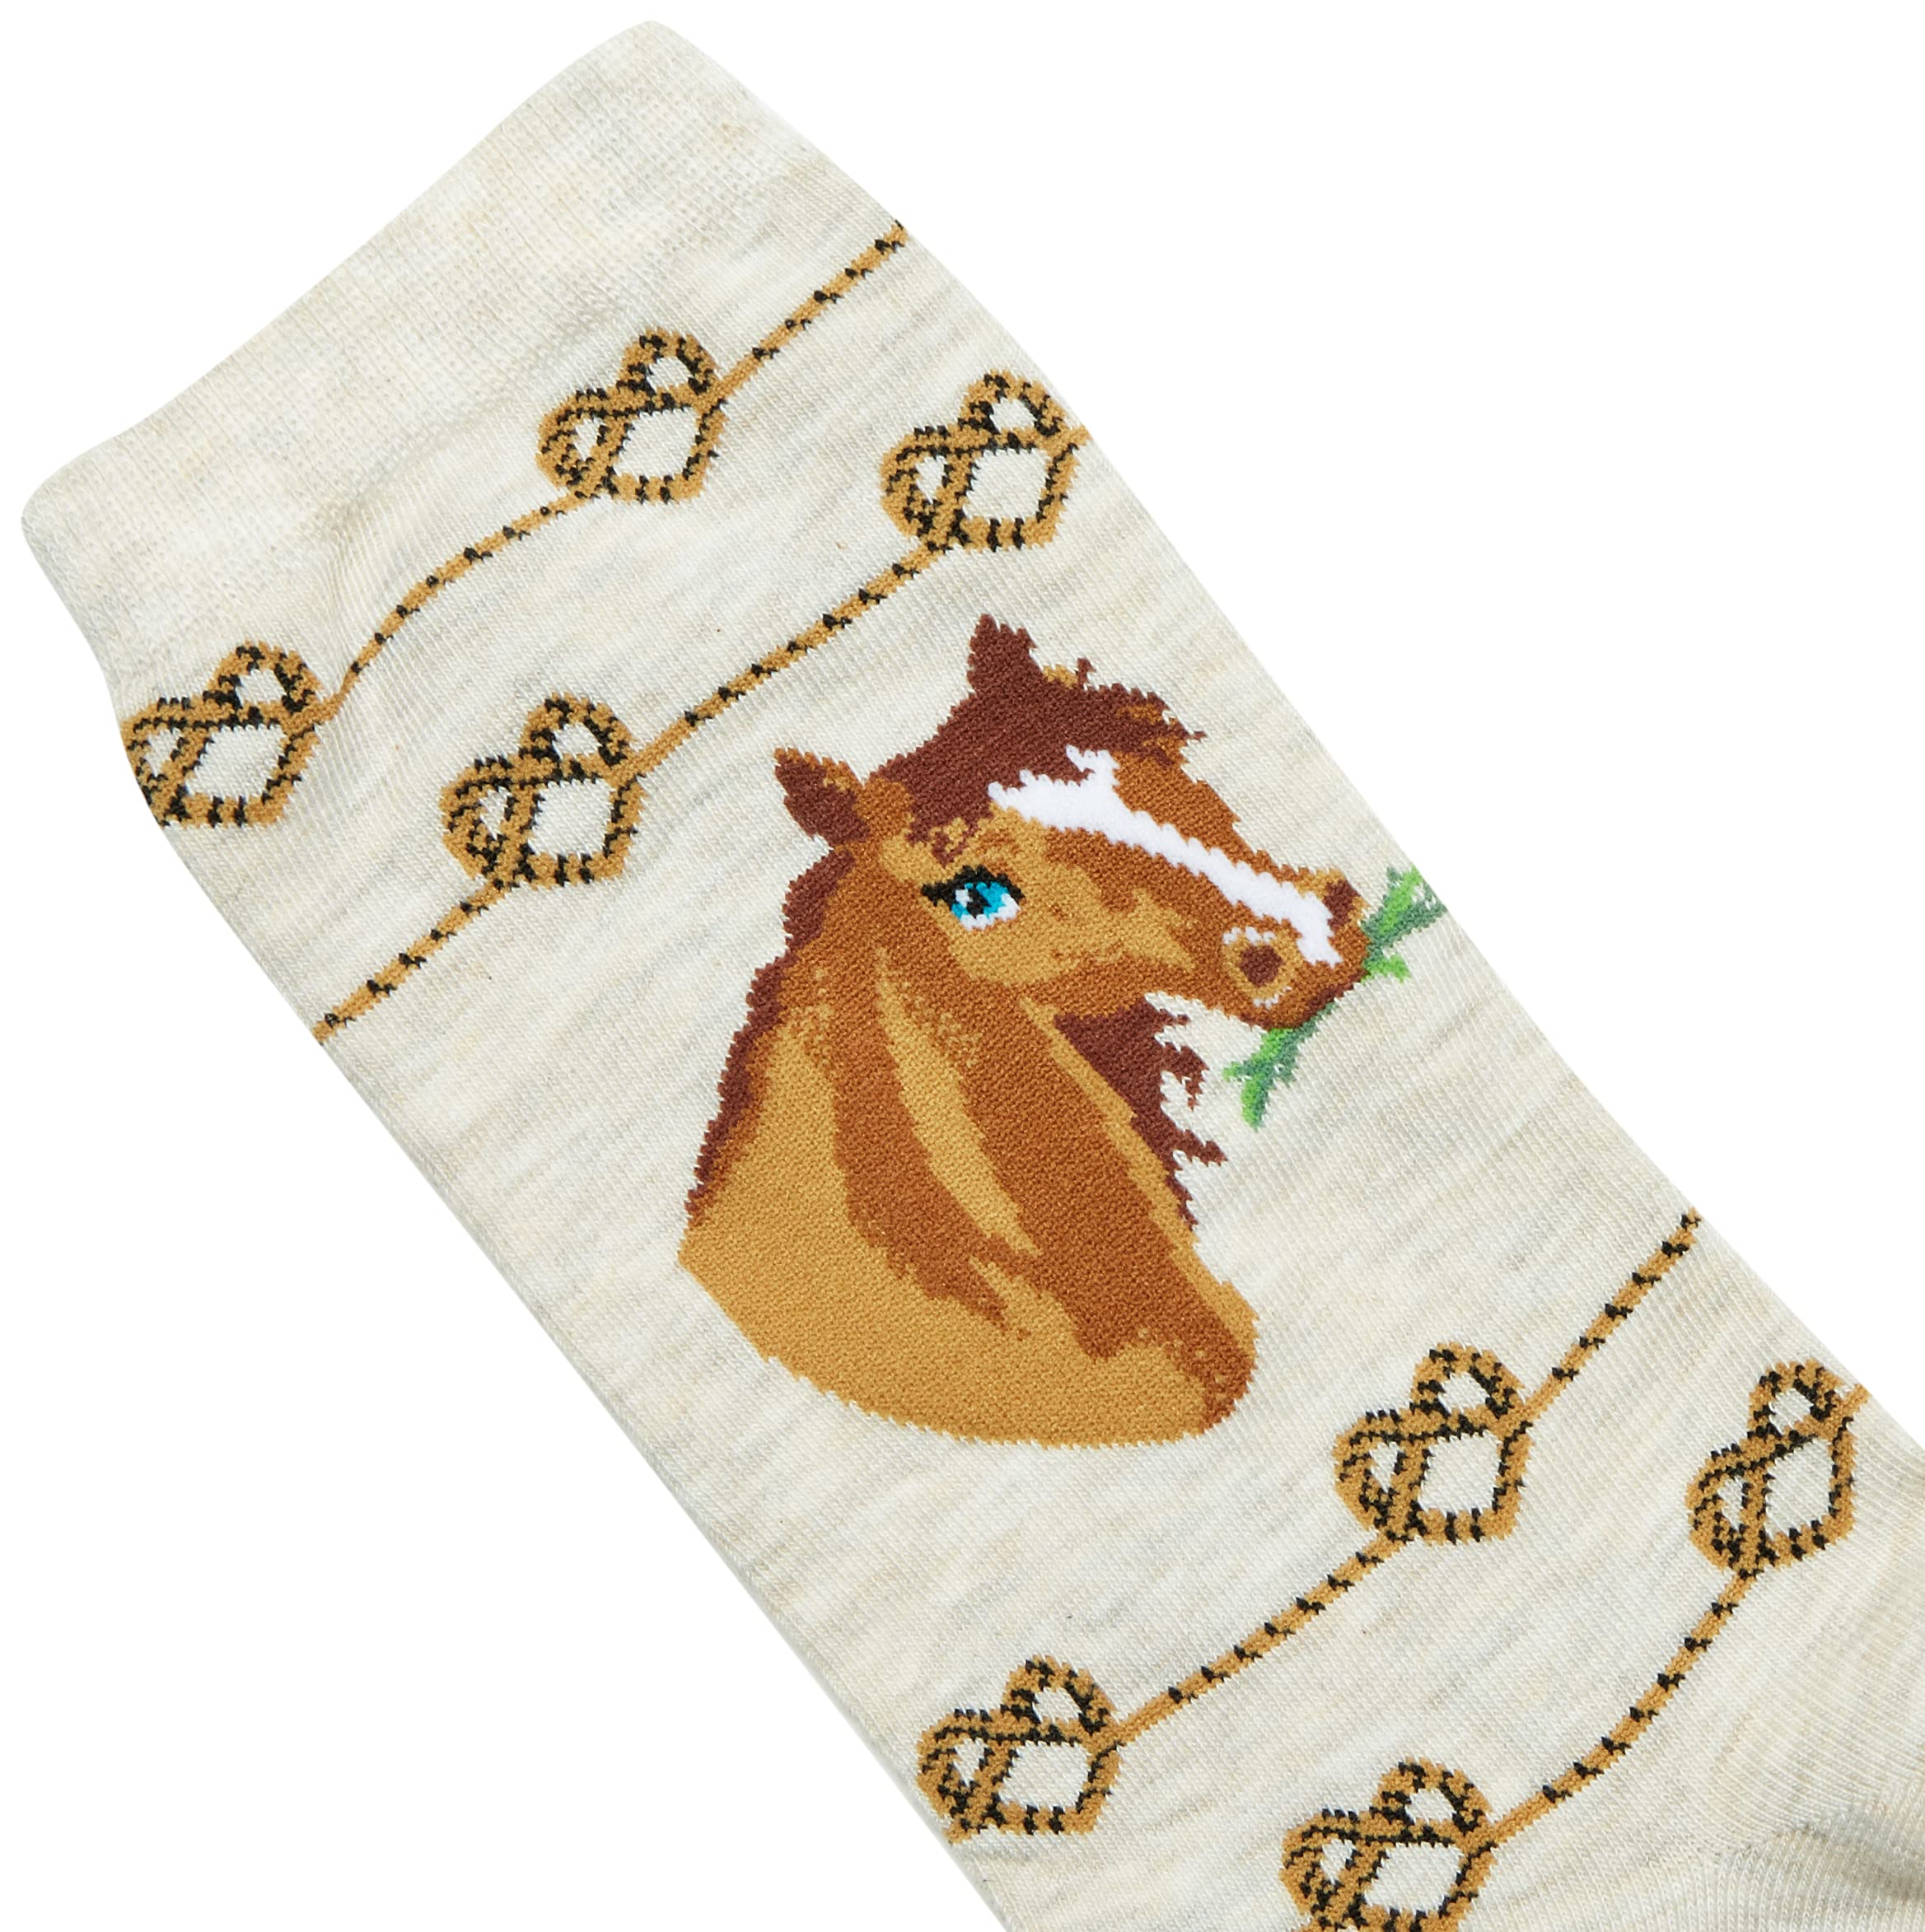 K. Bell Socks Women's Fun Horses & Cowgirls Crew Socks-1 Pairs-Cool & Cute Pop Culture Gifts